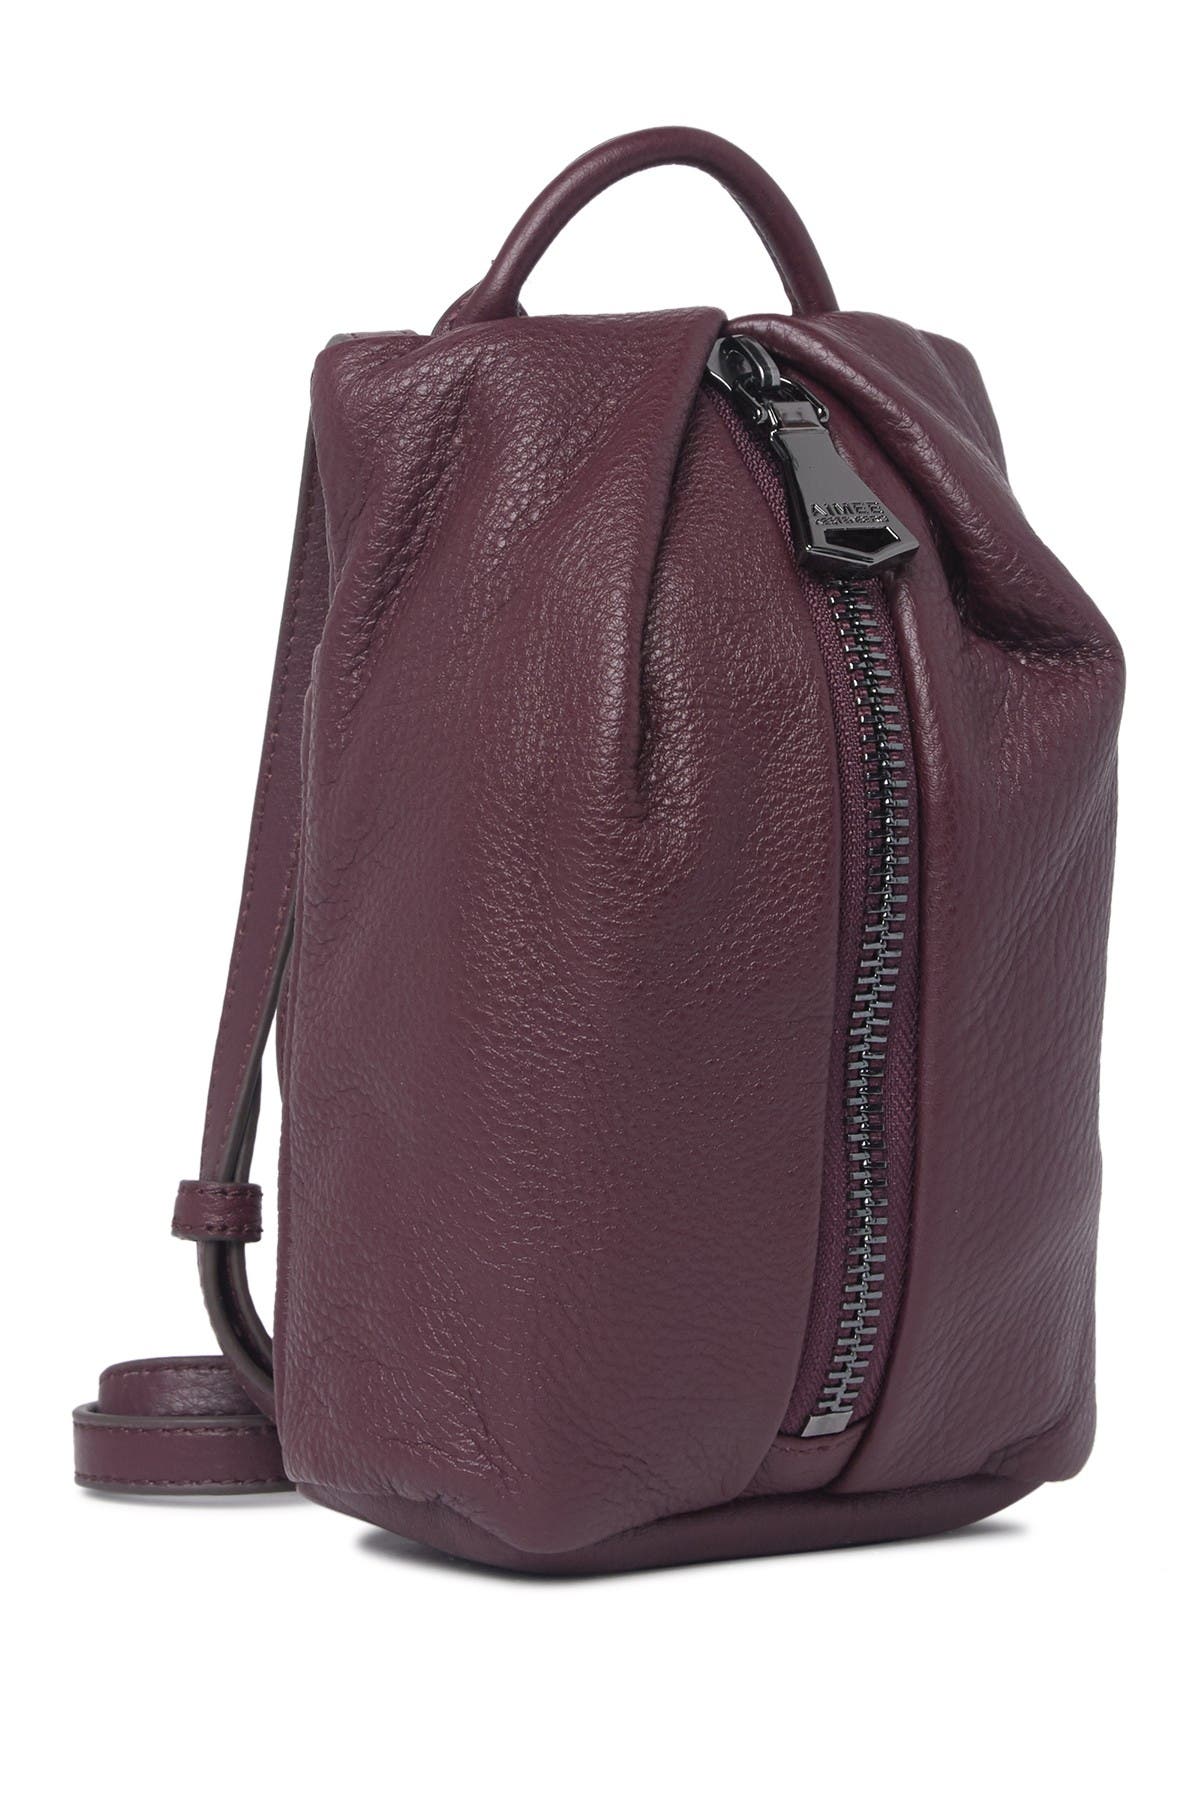 Aimee Kestenberg | Tamitha Mini Leather Crossbody Bag | Nordstrom Rack